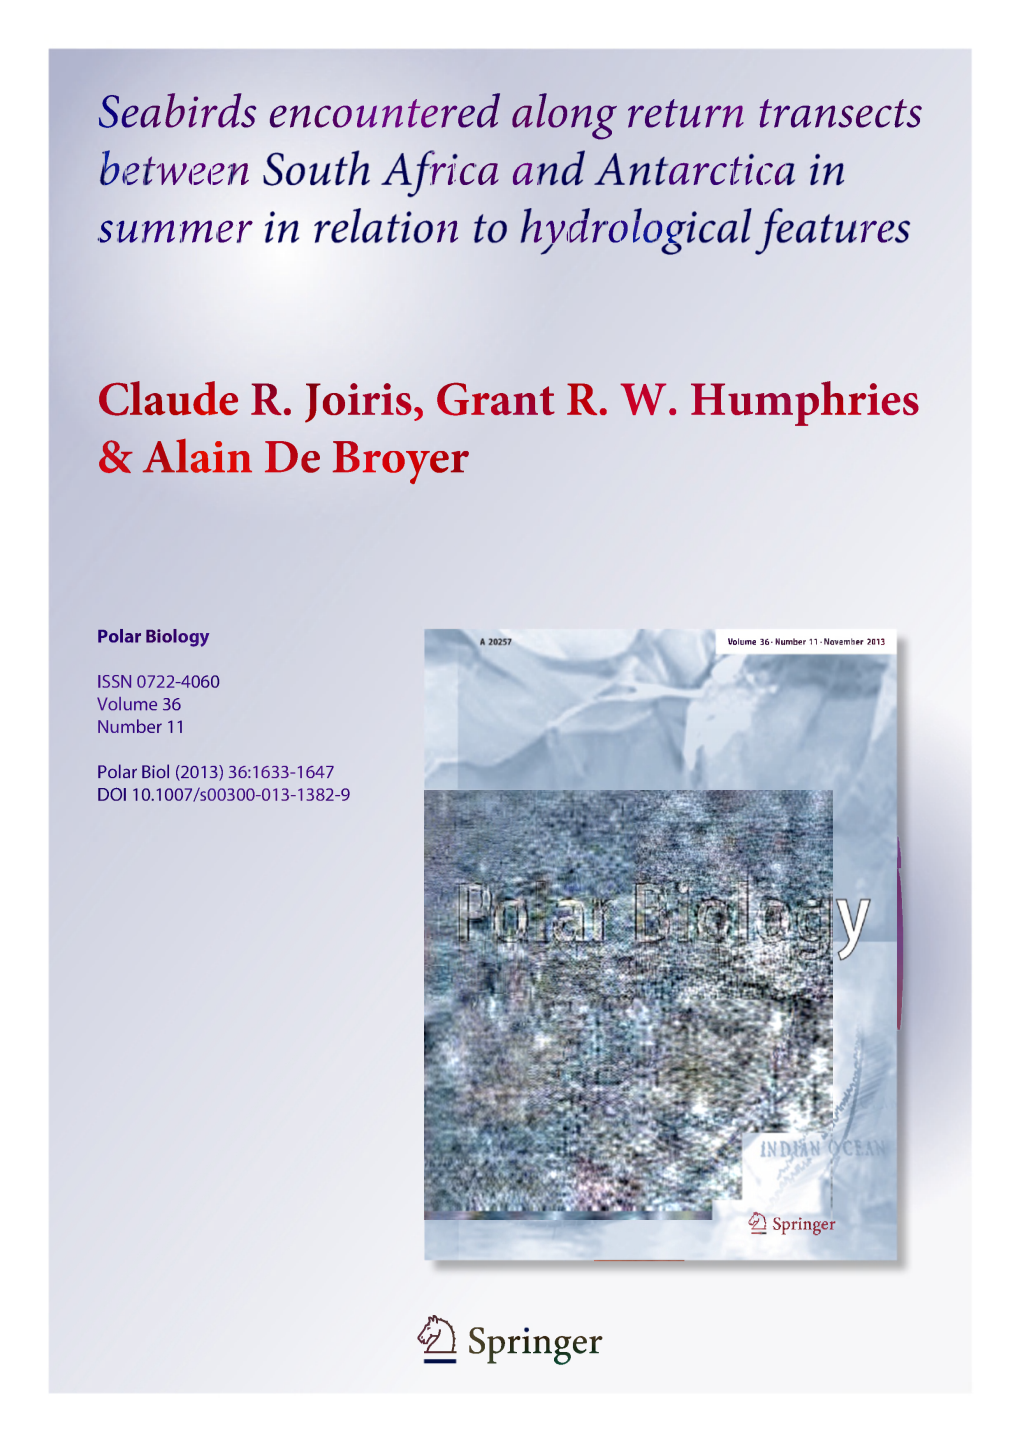 Claude R. Joiris, Grant R. W. Humphries & Alain De Broyer